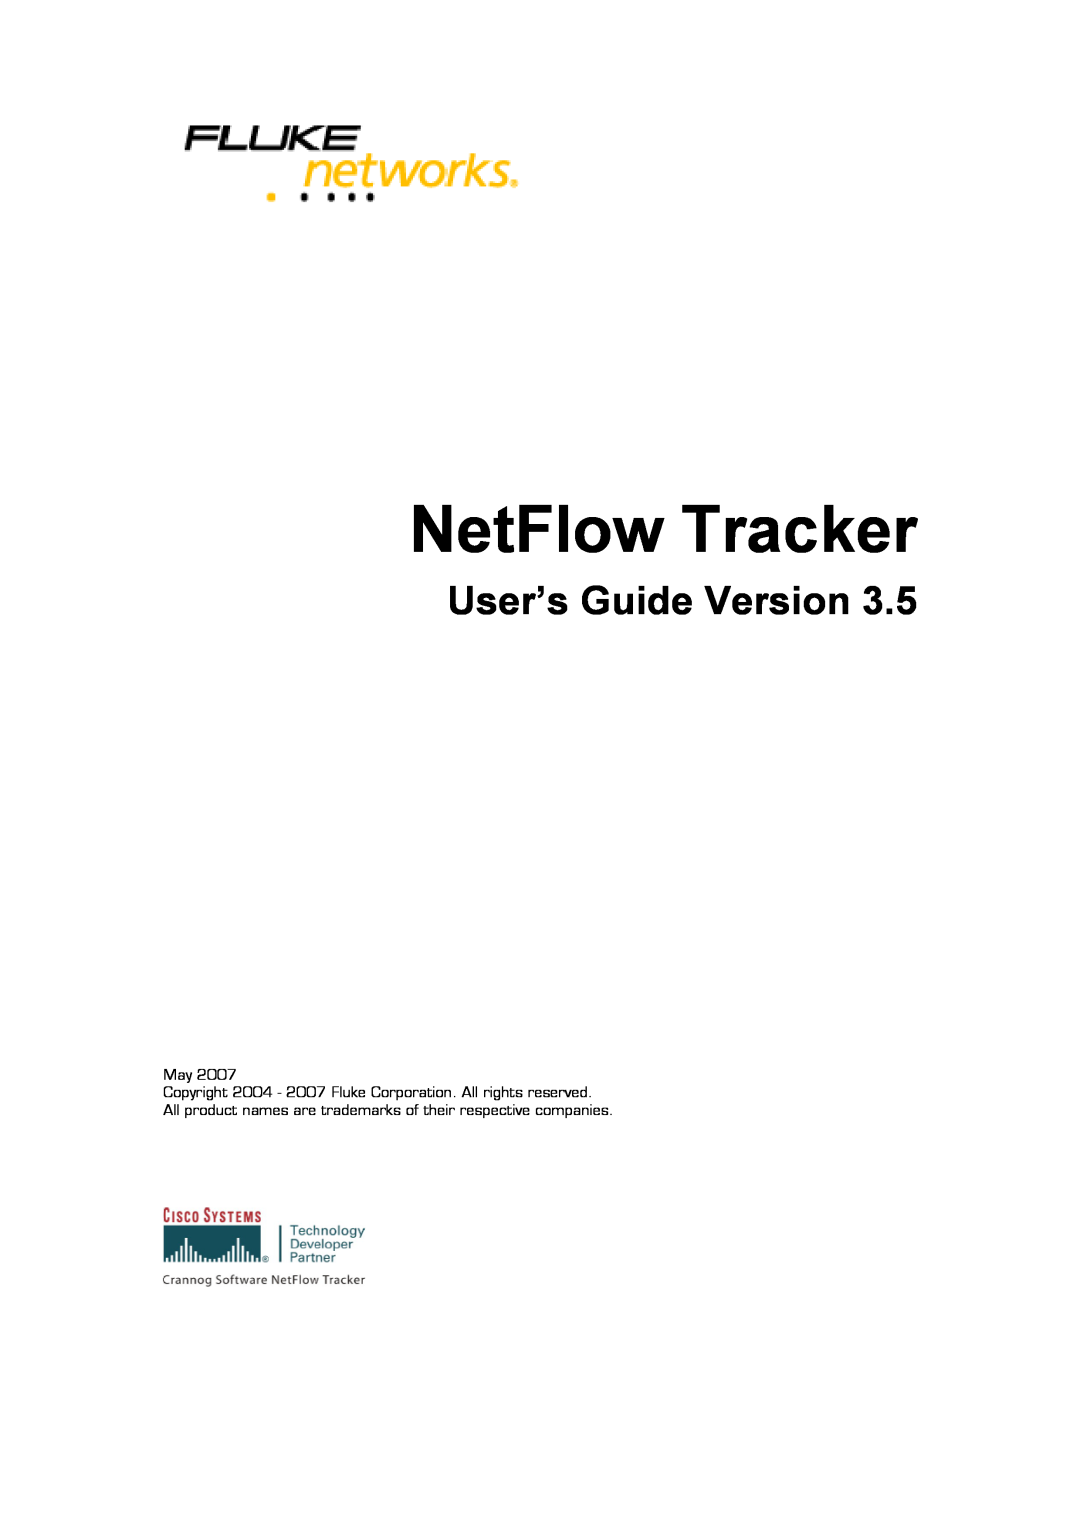 Fluke Computer Accessories manual NetFlow Tracker, User’s Guide Version 